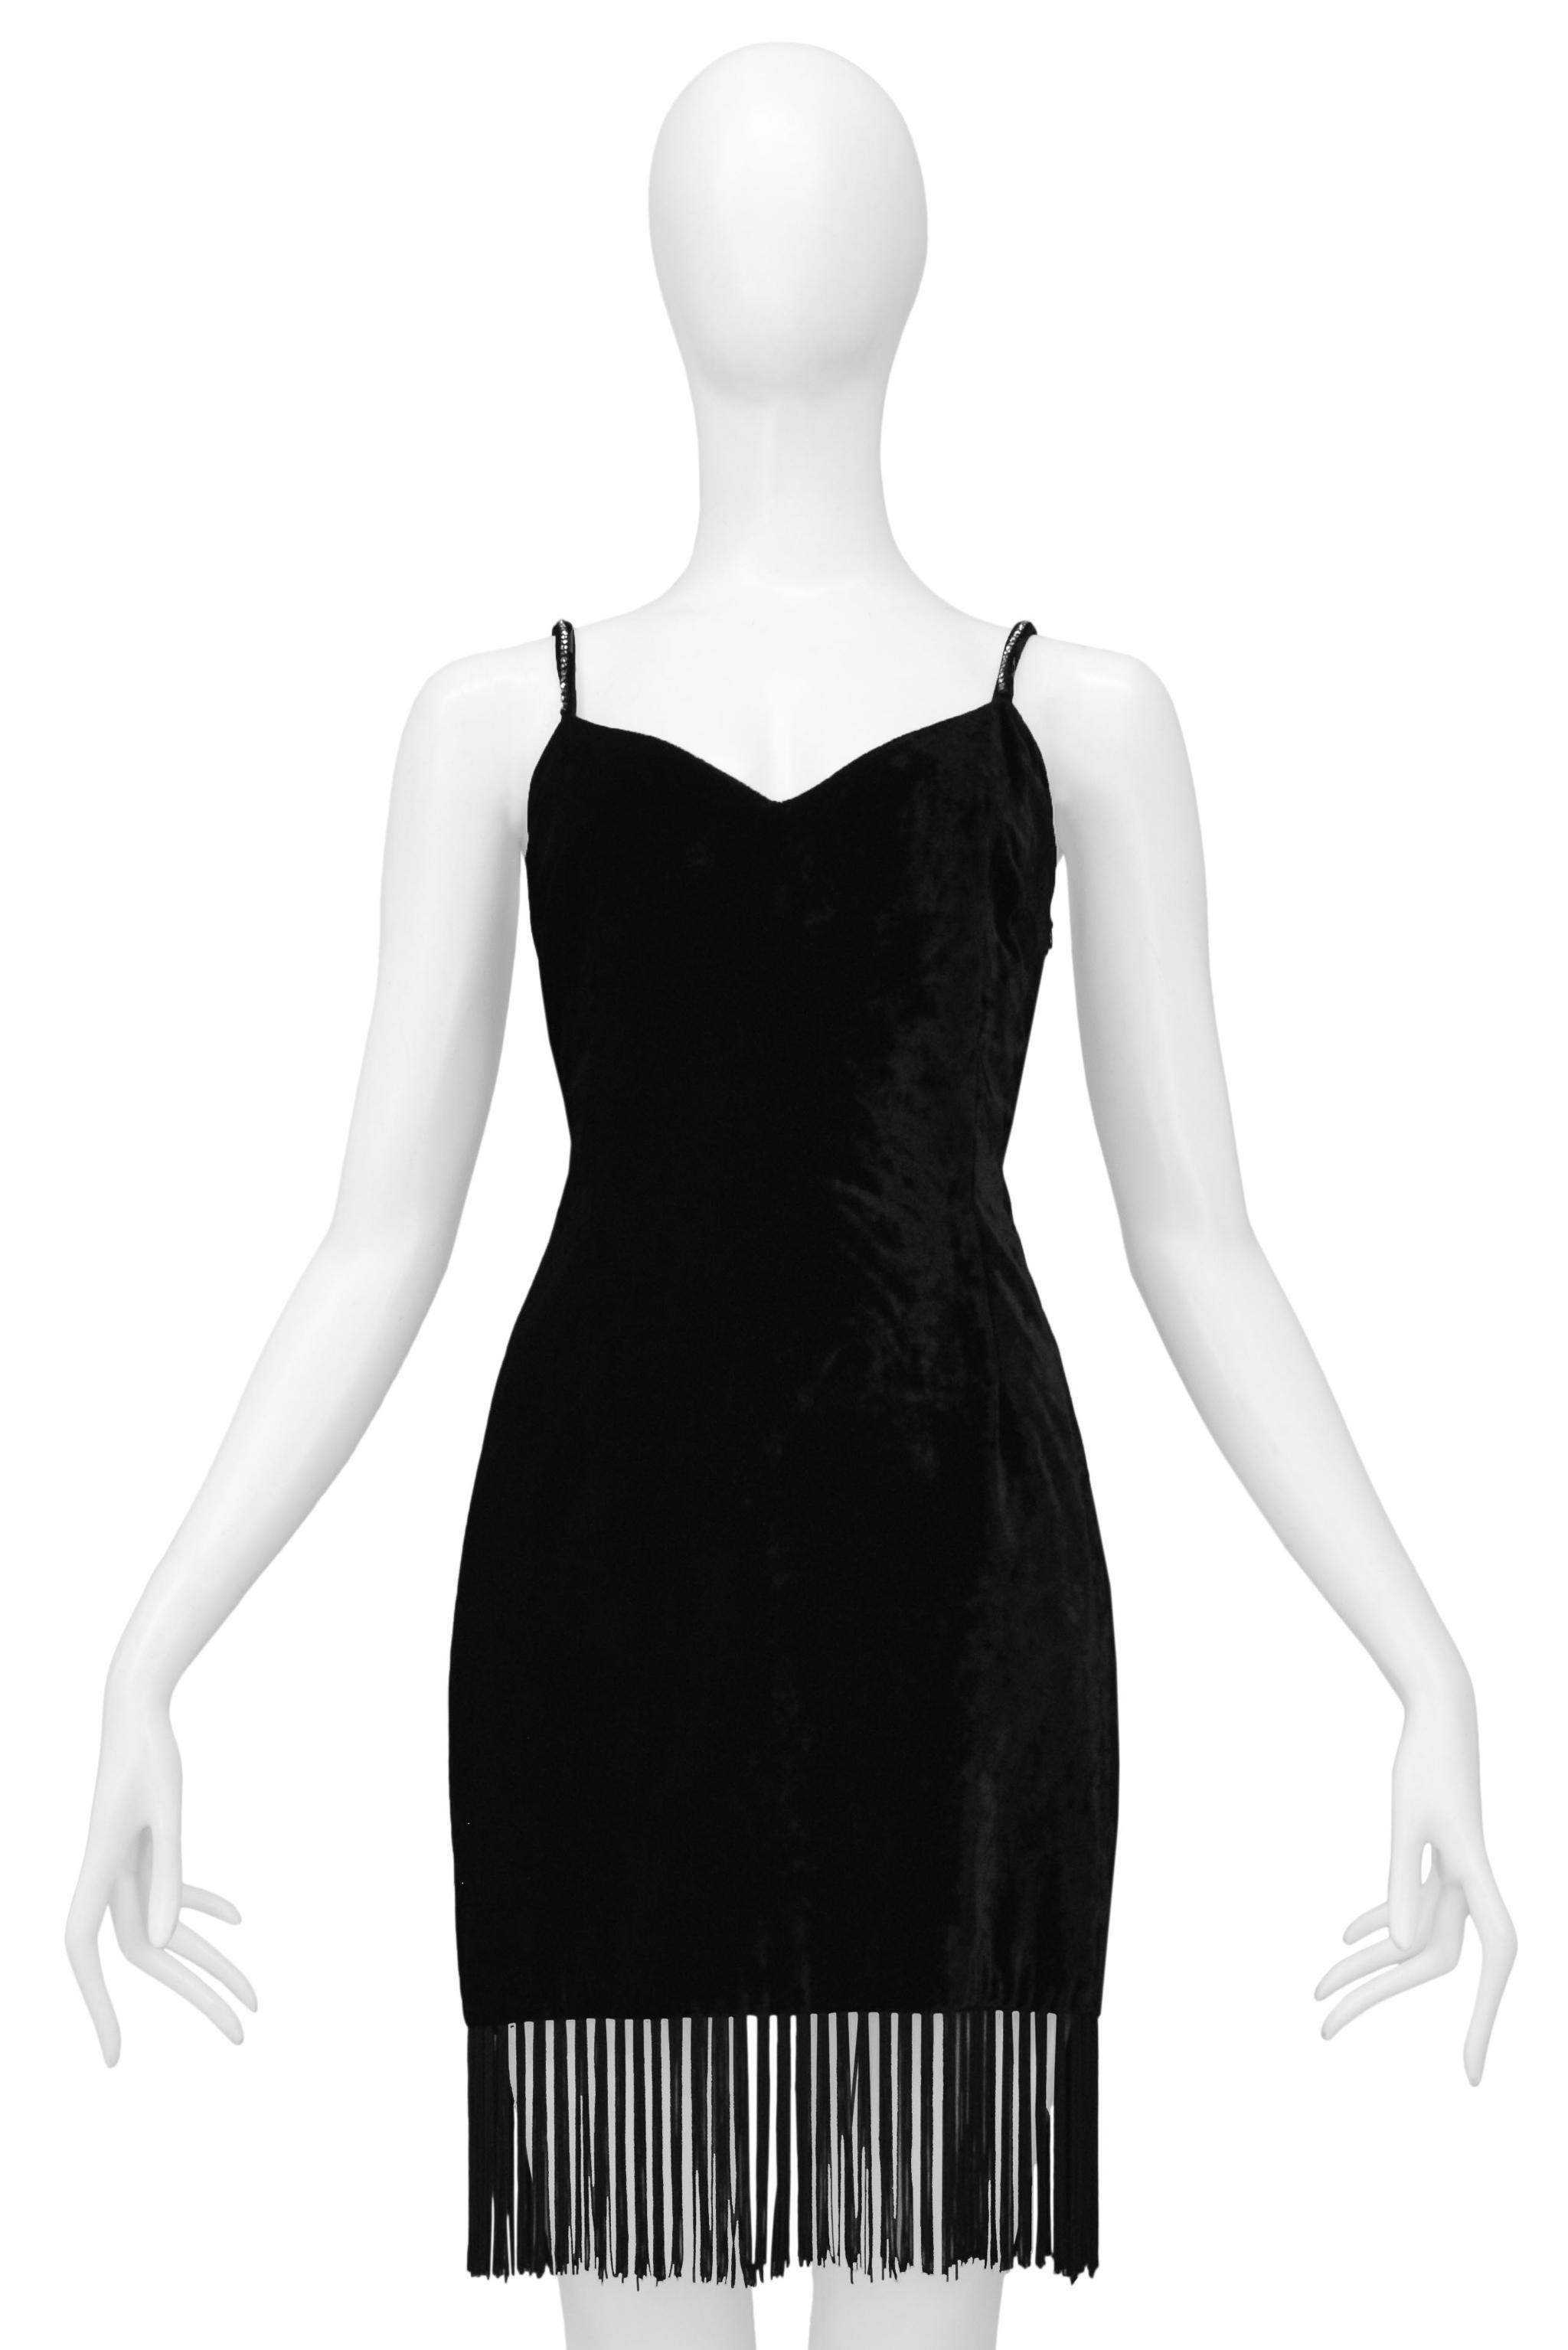 Dolce & Gabbana Black Velvet Mini Dress With Fringe Hem & Rhinestone Straps In Excellent Condition For Sale In Los Angeles, CA